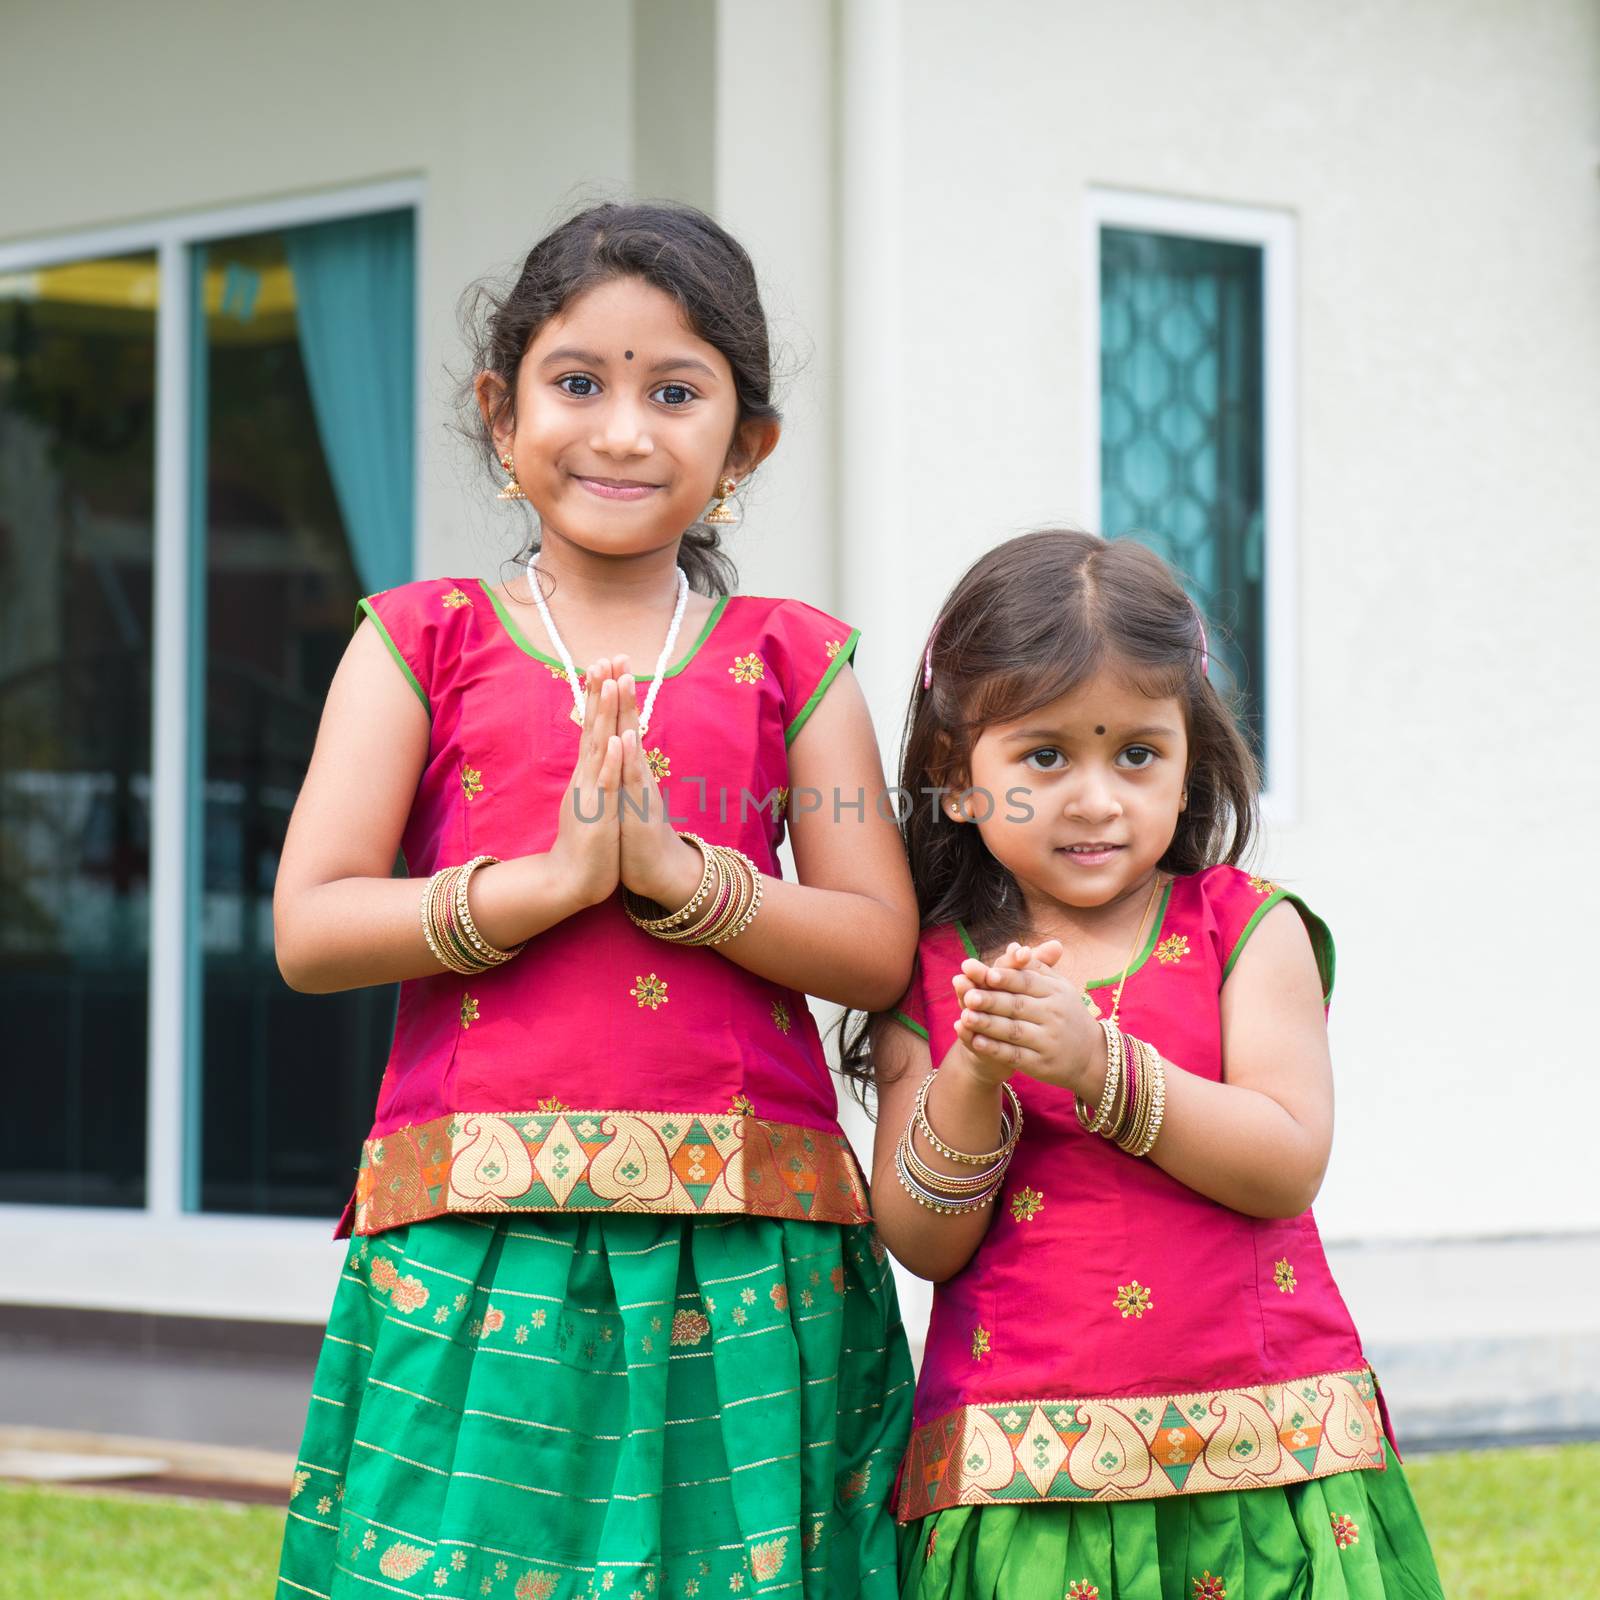 Cute Indian girls in sari greeting by szefei